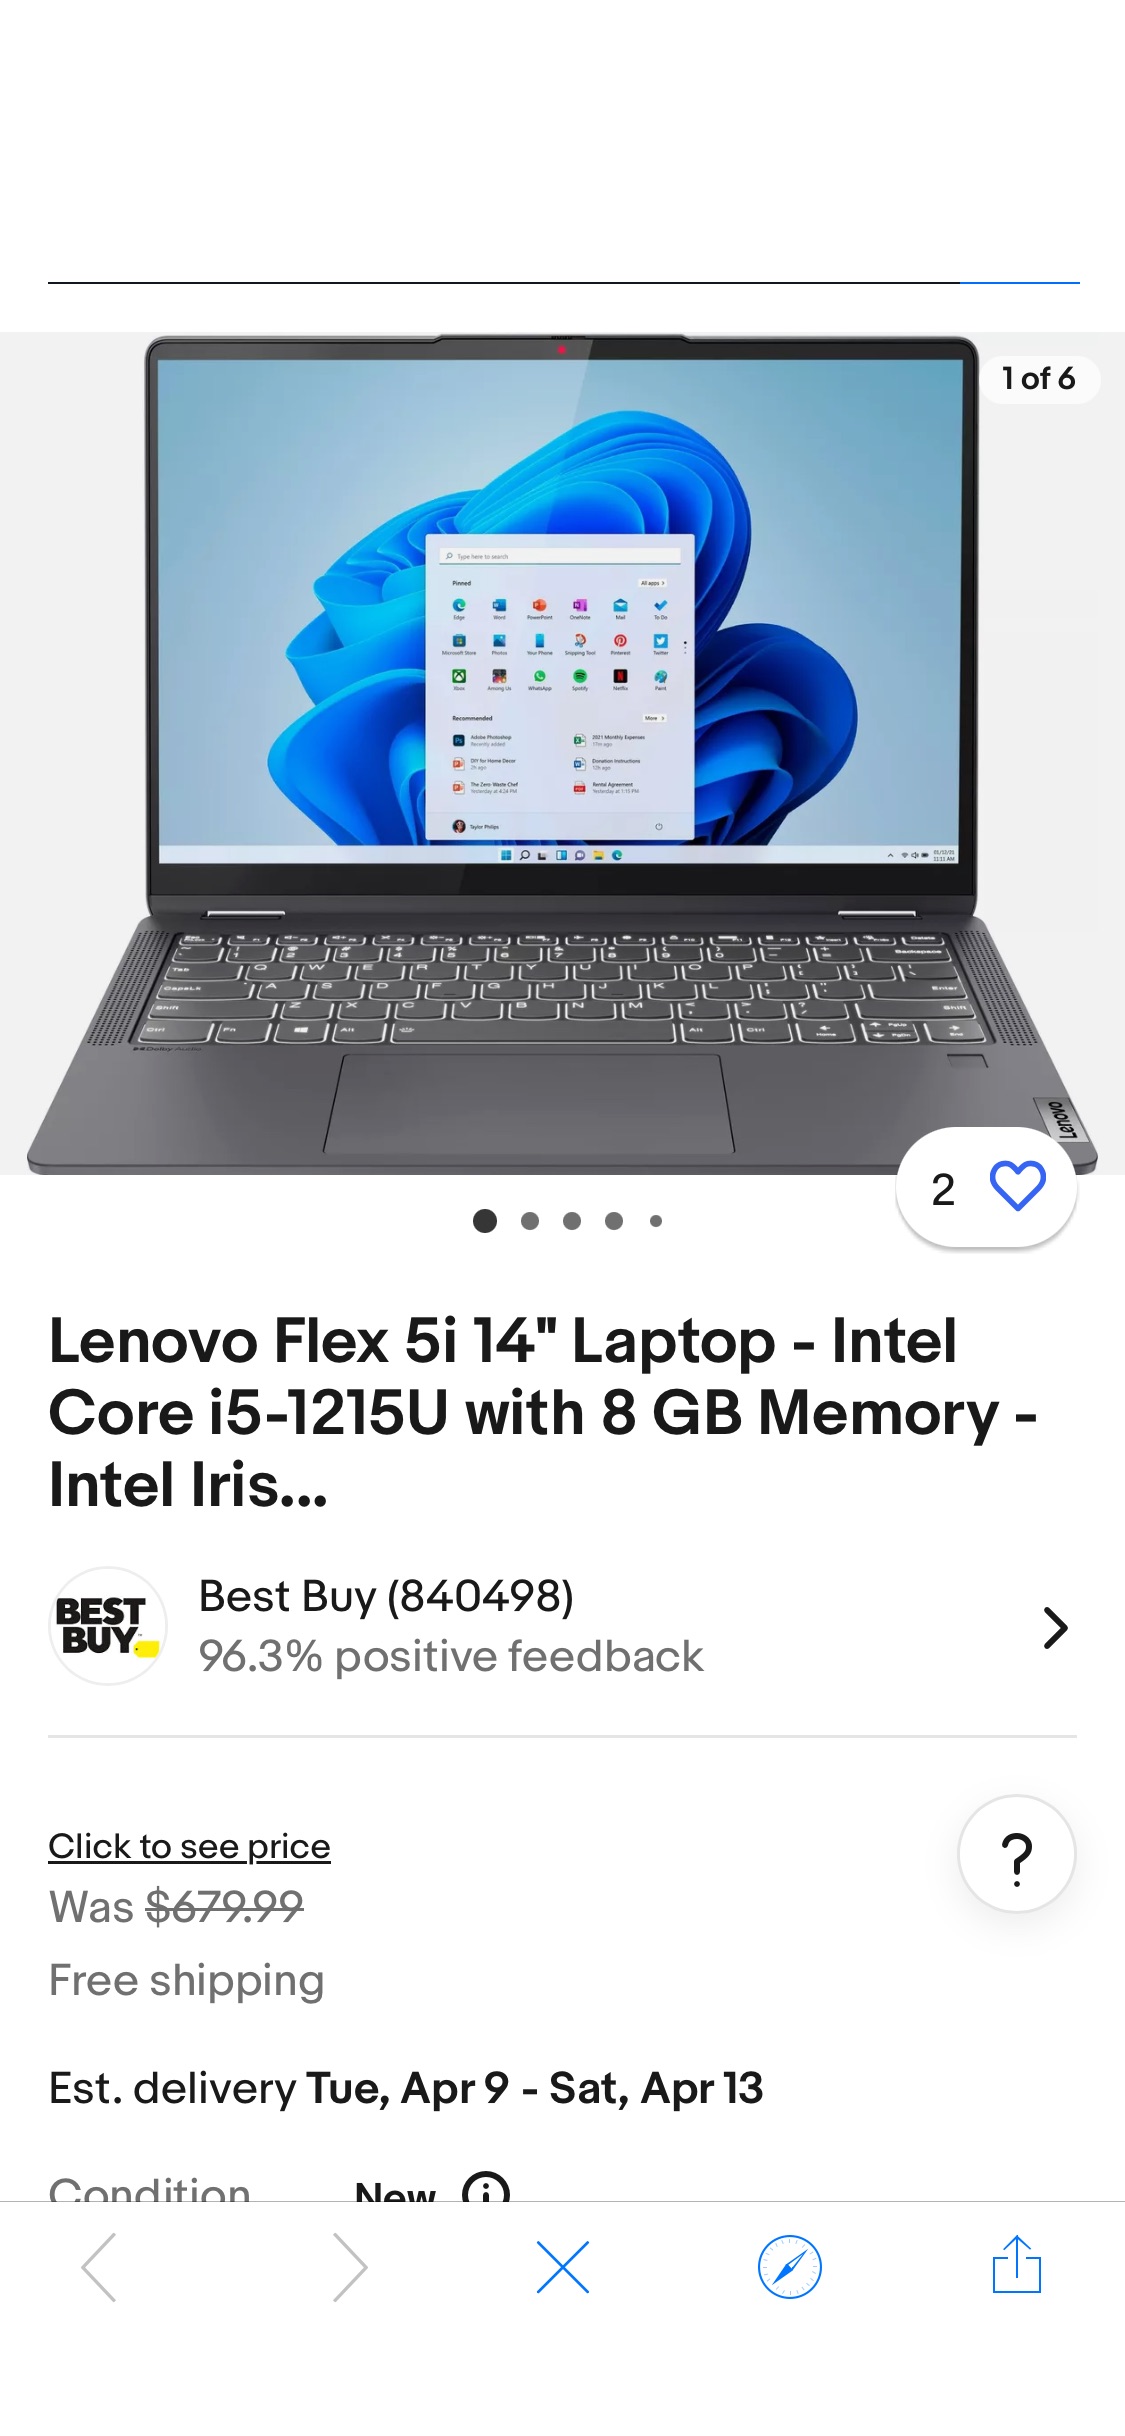 Lenovo Flex 5i 14" Laptop - Intel Core i5-1215U with 8 GB Memory - Intel Iris... | eBay